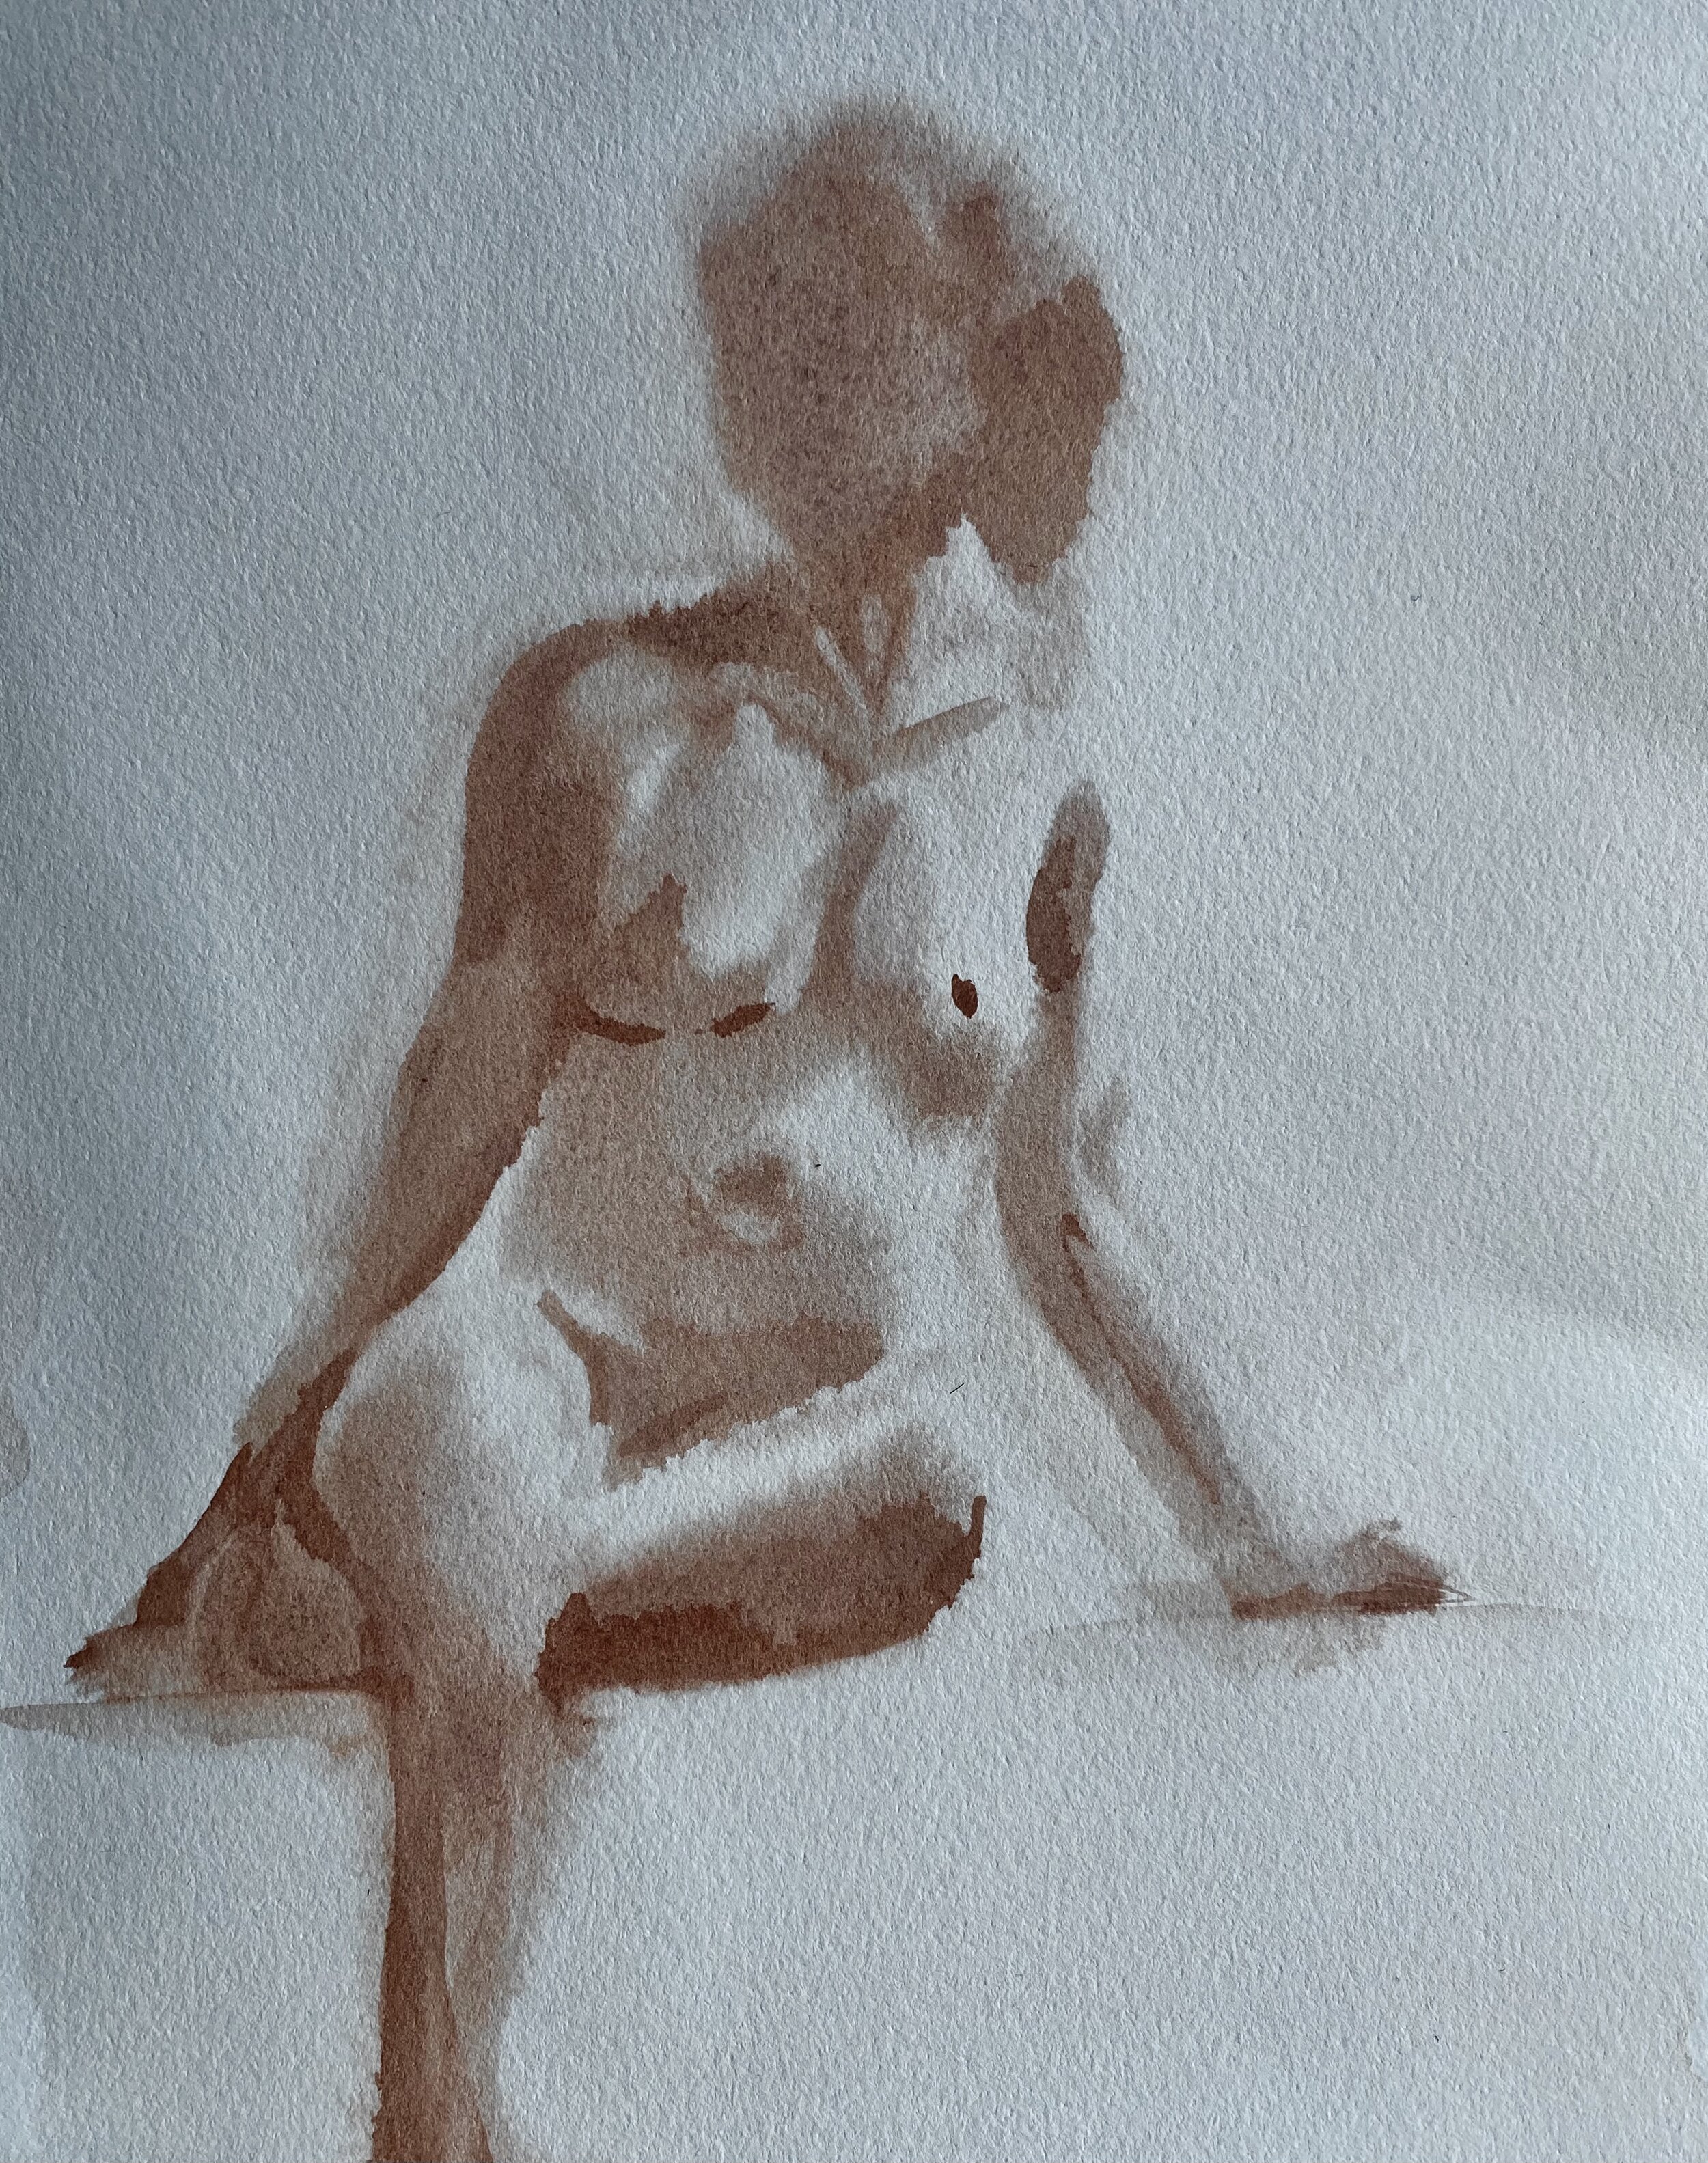 Five minute pose, watercolor, 7 x 10"